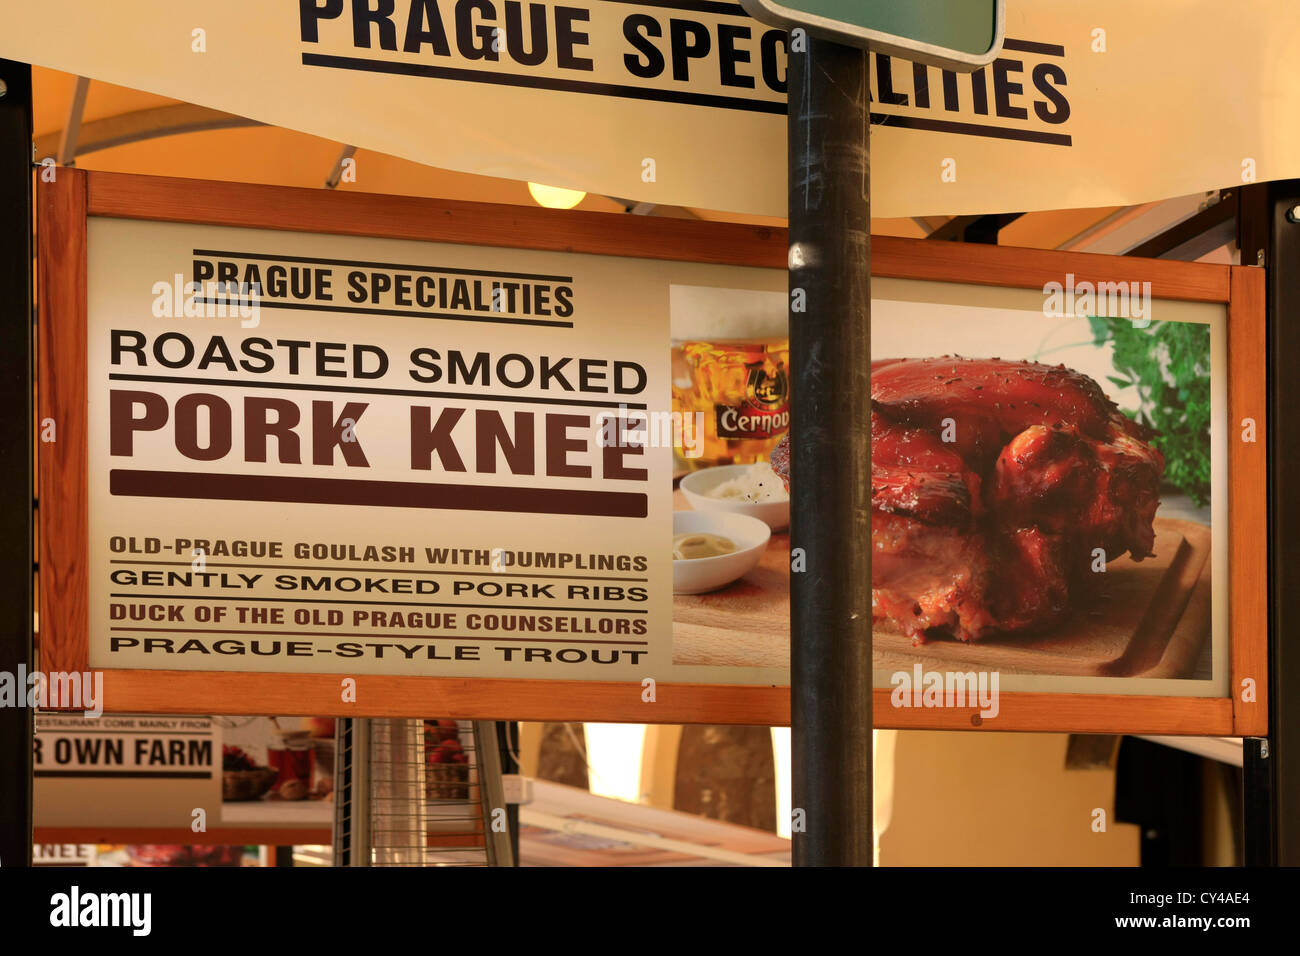 Praga menu di specialità - il ginocchio di maiale Foto Stock